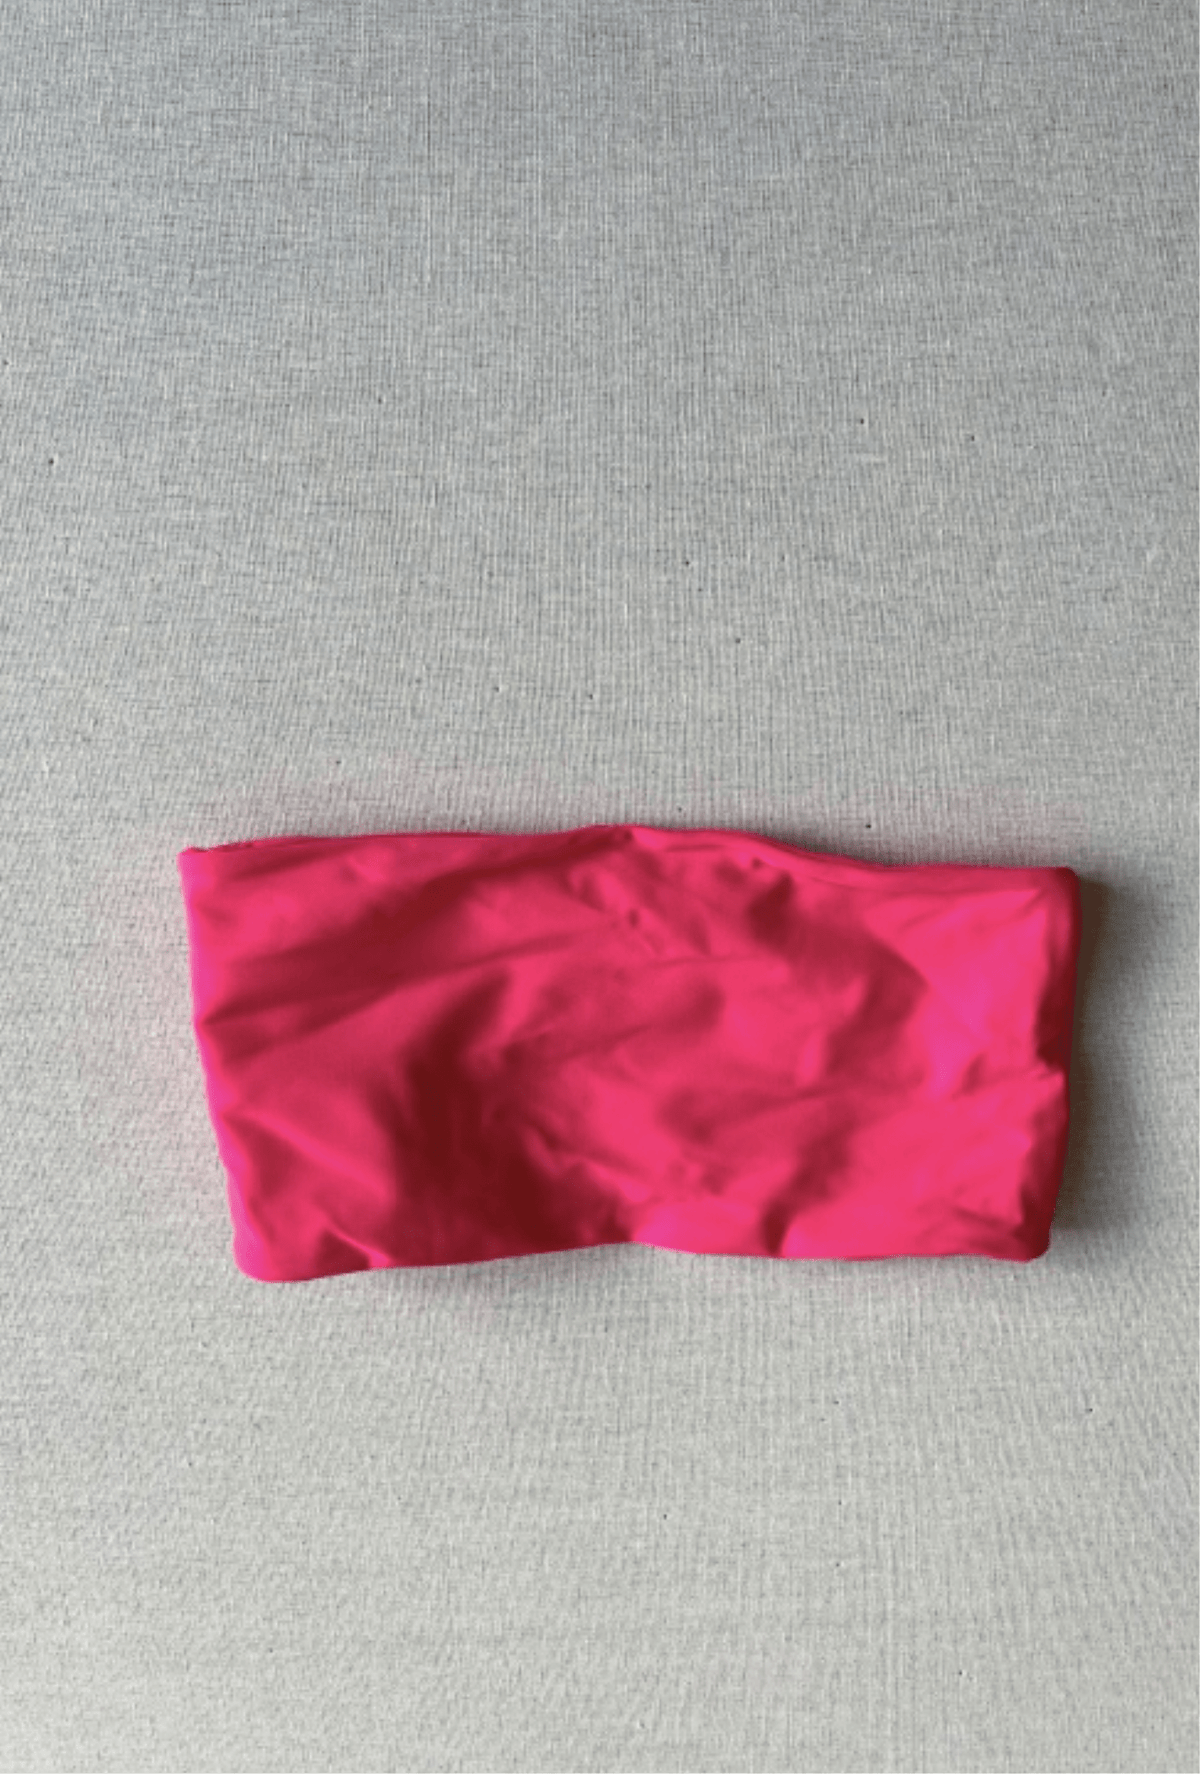 The Sari Top in Cherry Blossom